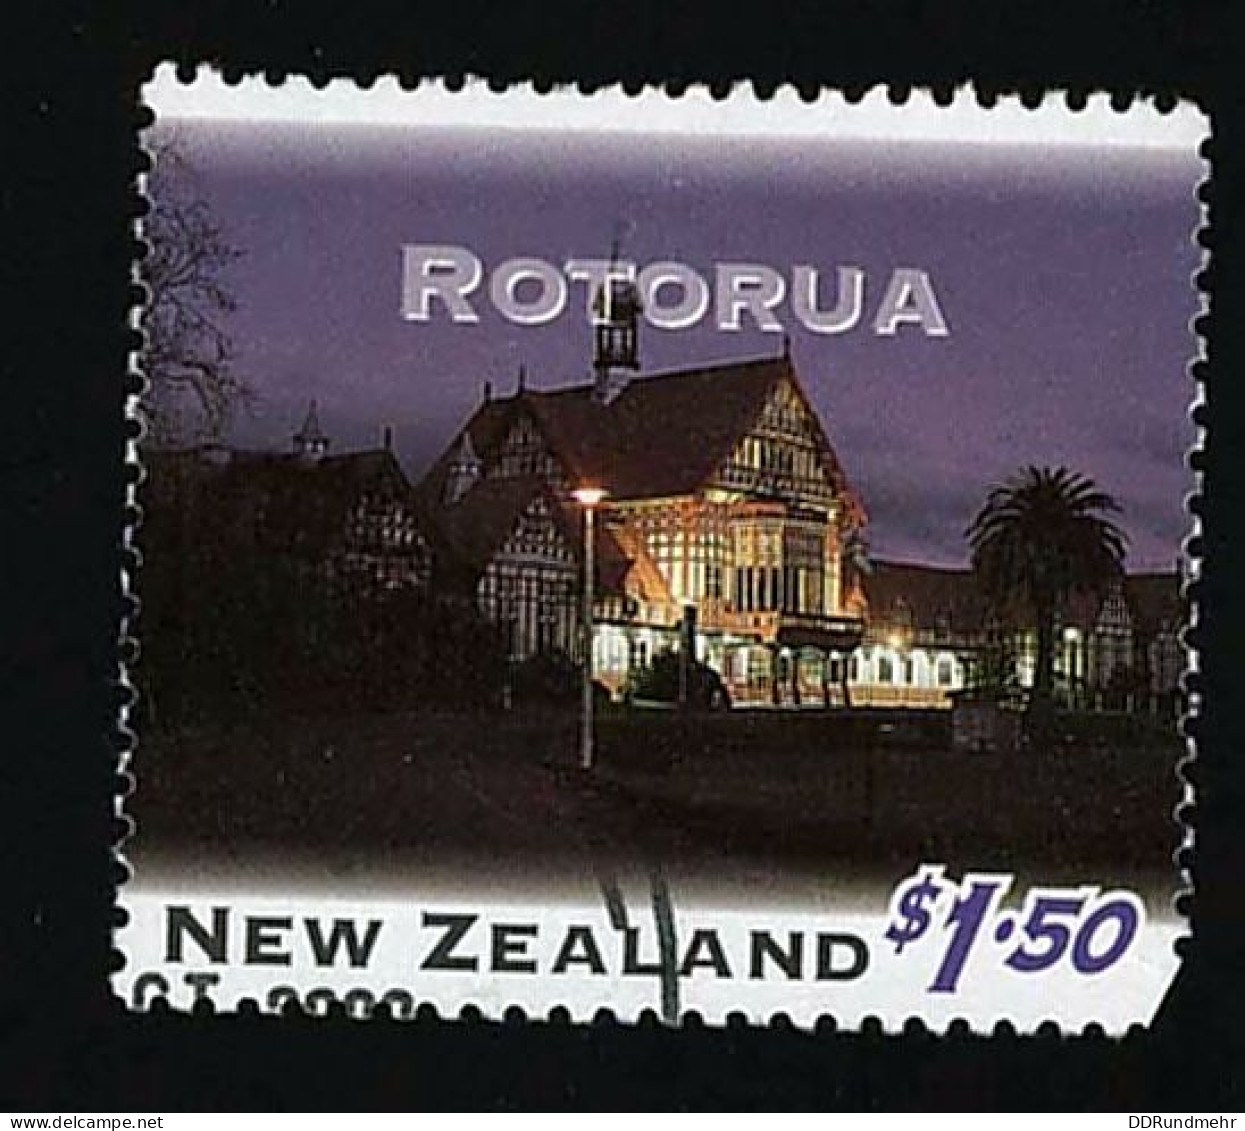 1995 Rotorua Michel NZ 1403 Stamp Number NZ 1253 Yvert Et Tellier NZ 1346 Stanley Gibbons NZ 1859 - Oblitérés